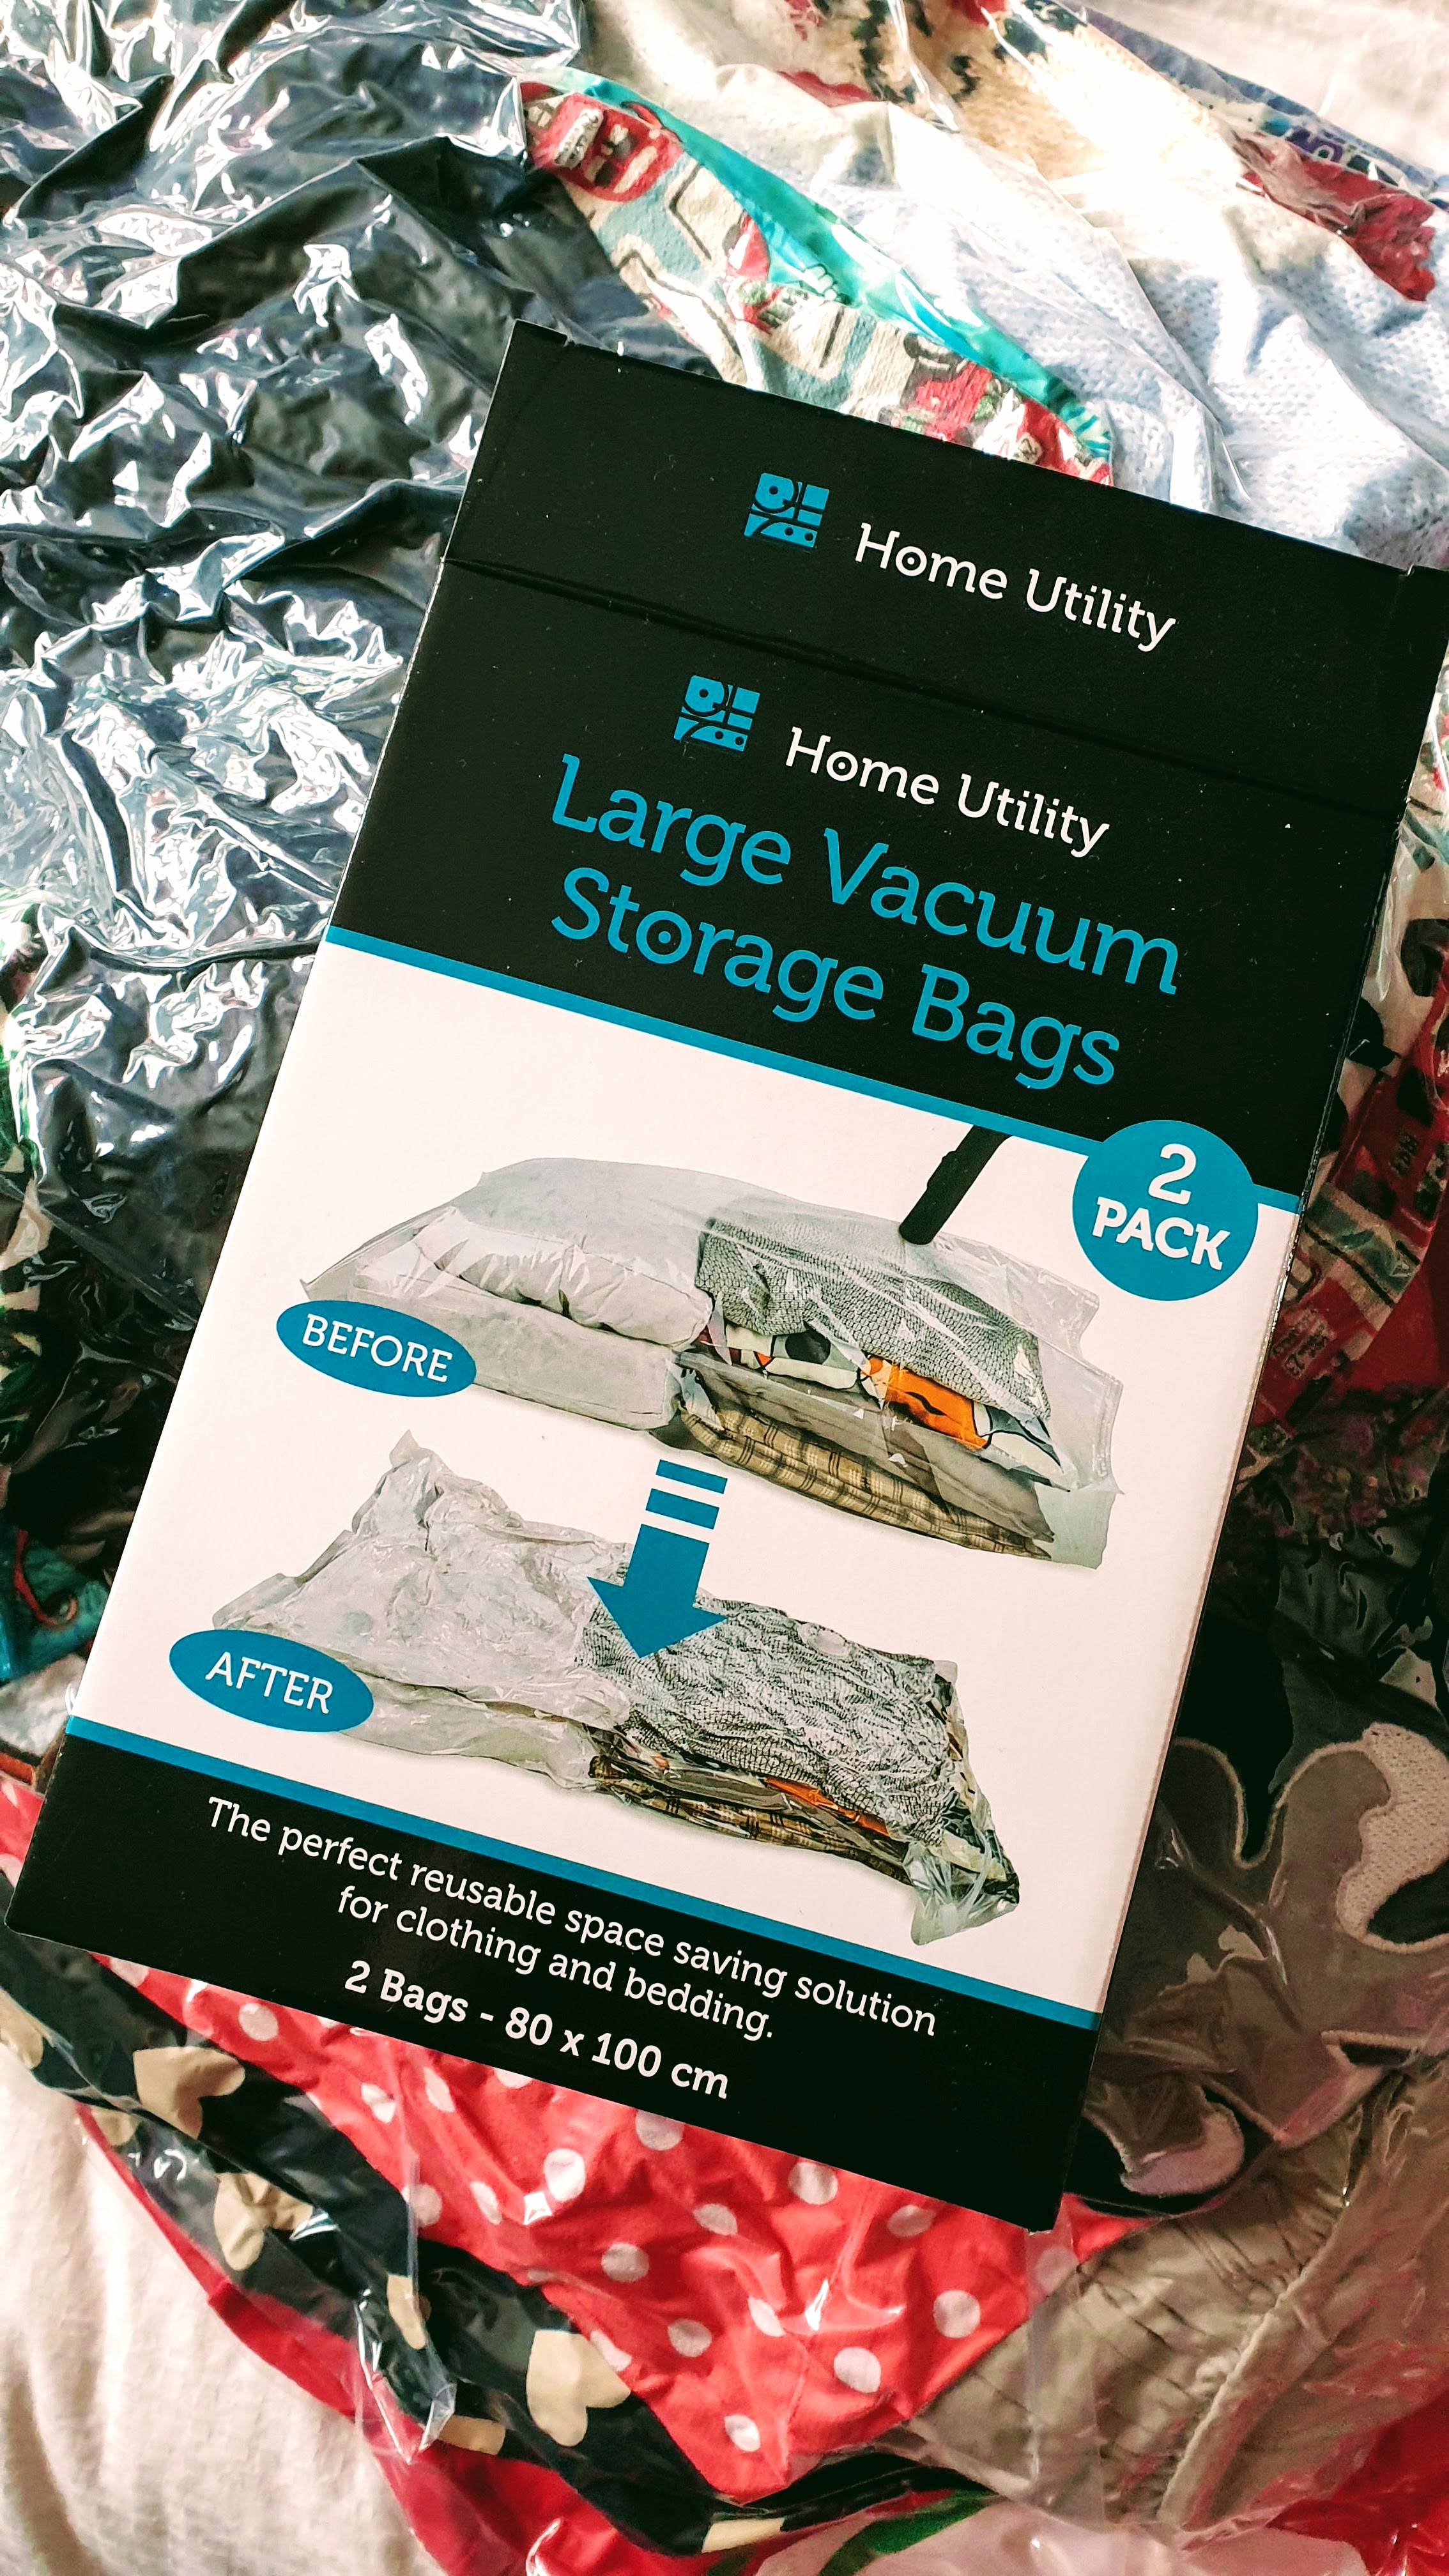 Large Vacuum Storage Bags: Bargain Of The Year